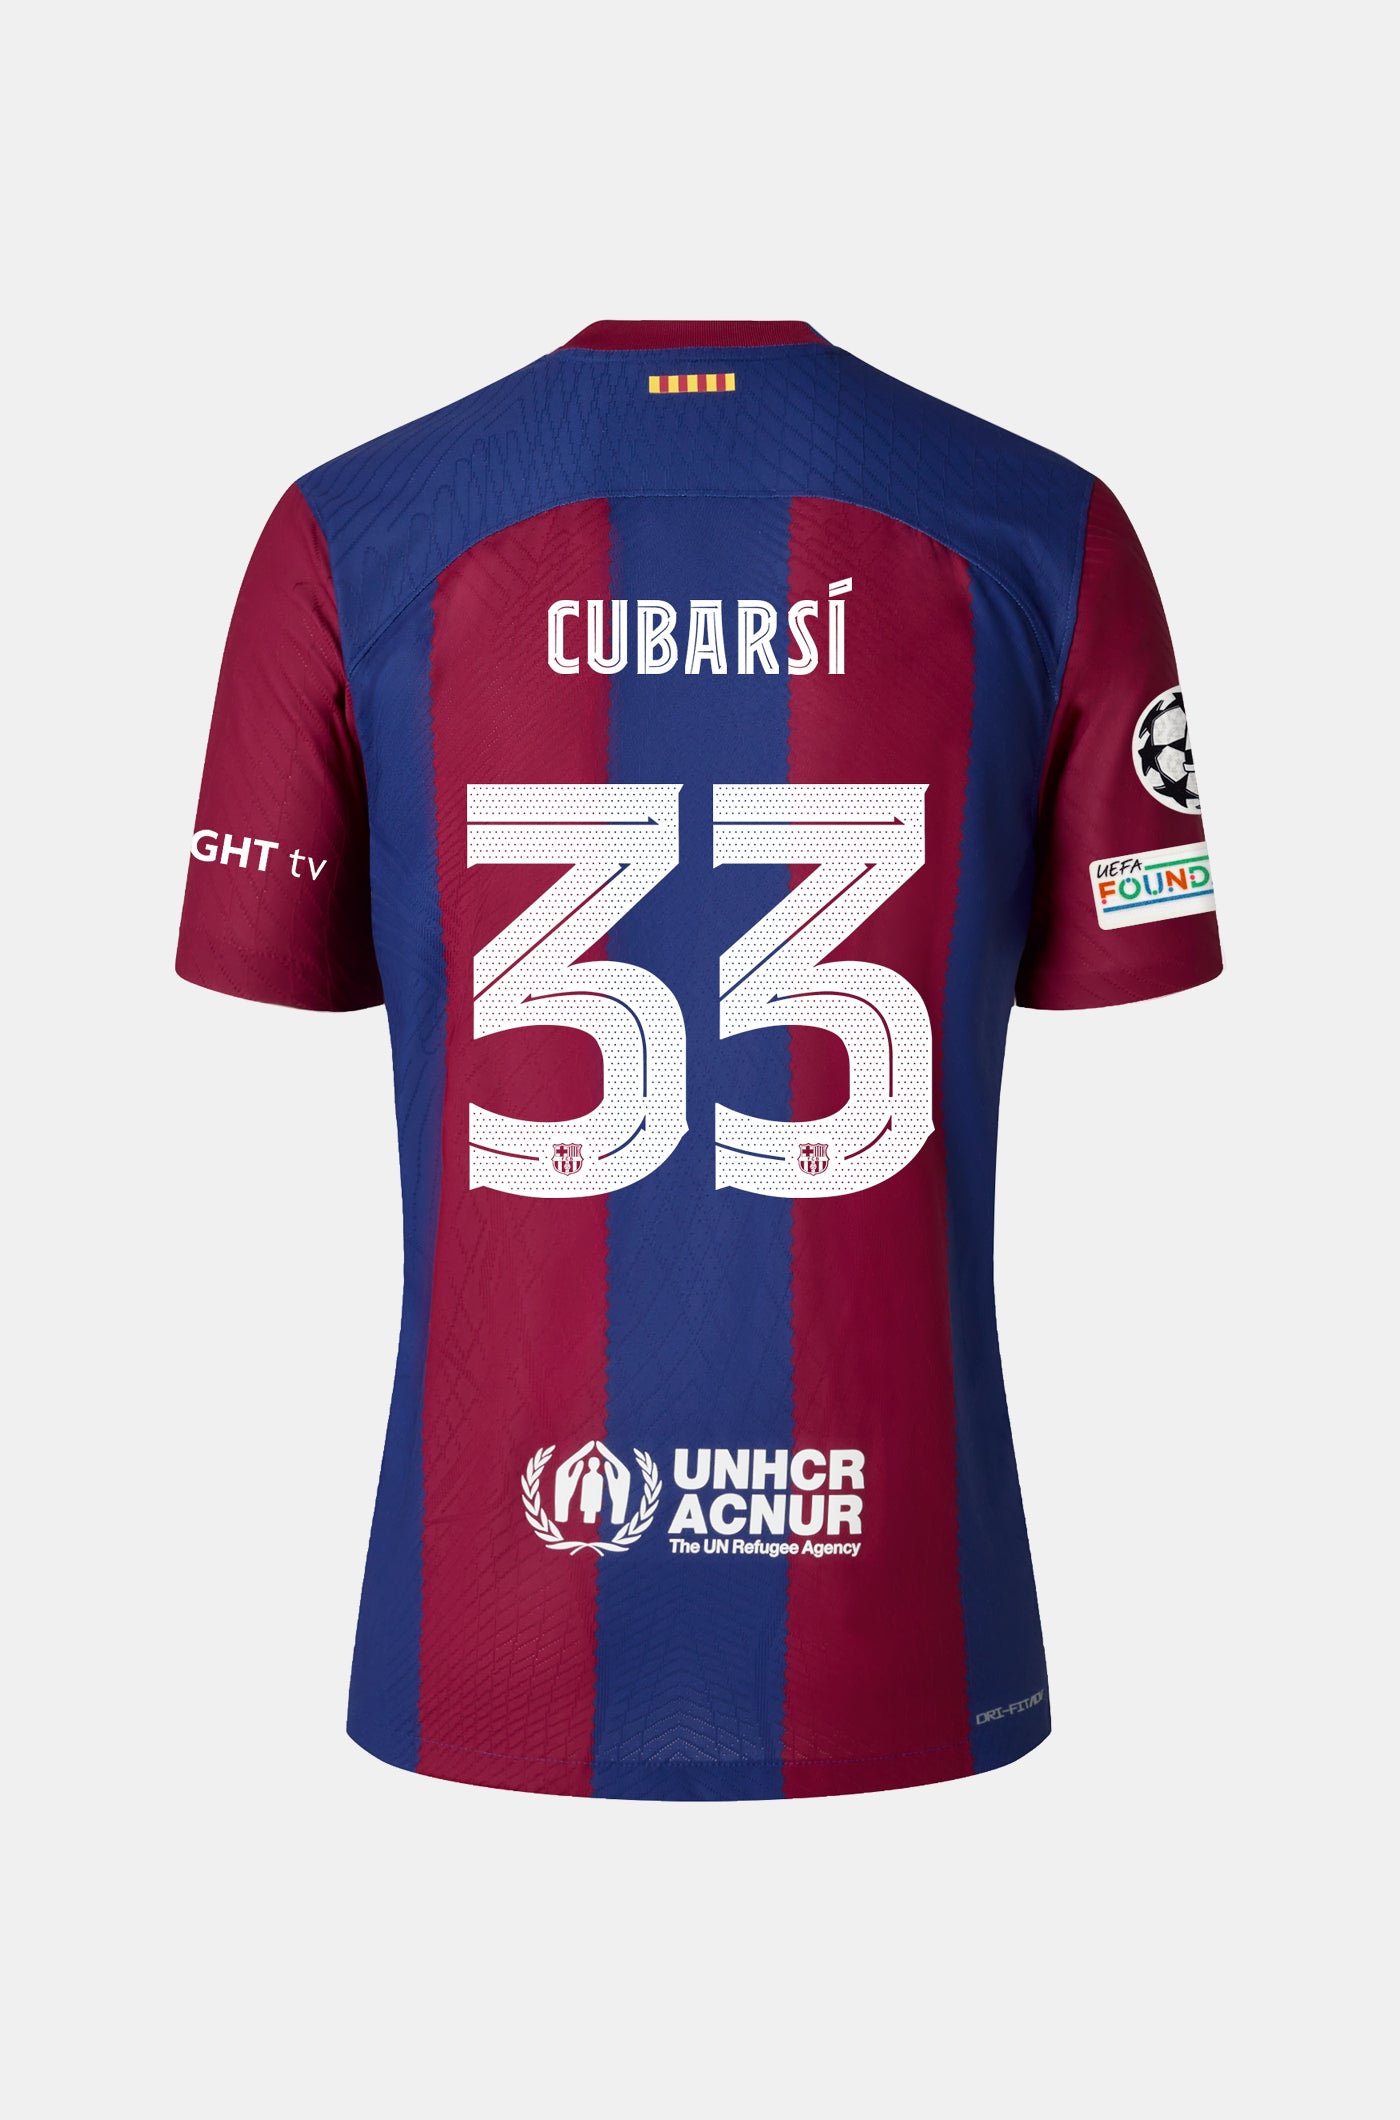 UCL FC Barcelona home shirt 23/24 Player's Edition  - CUBARSÍ